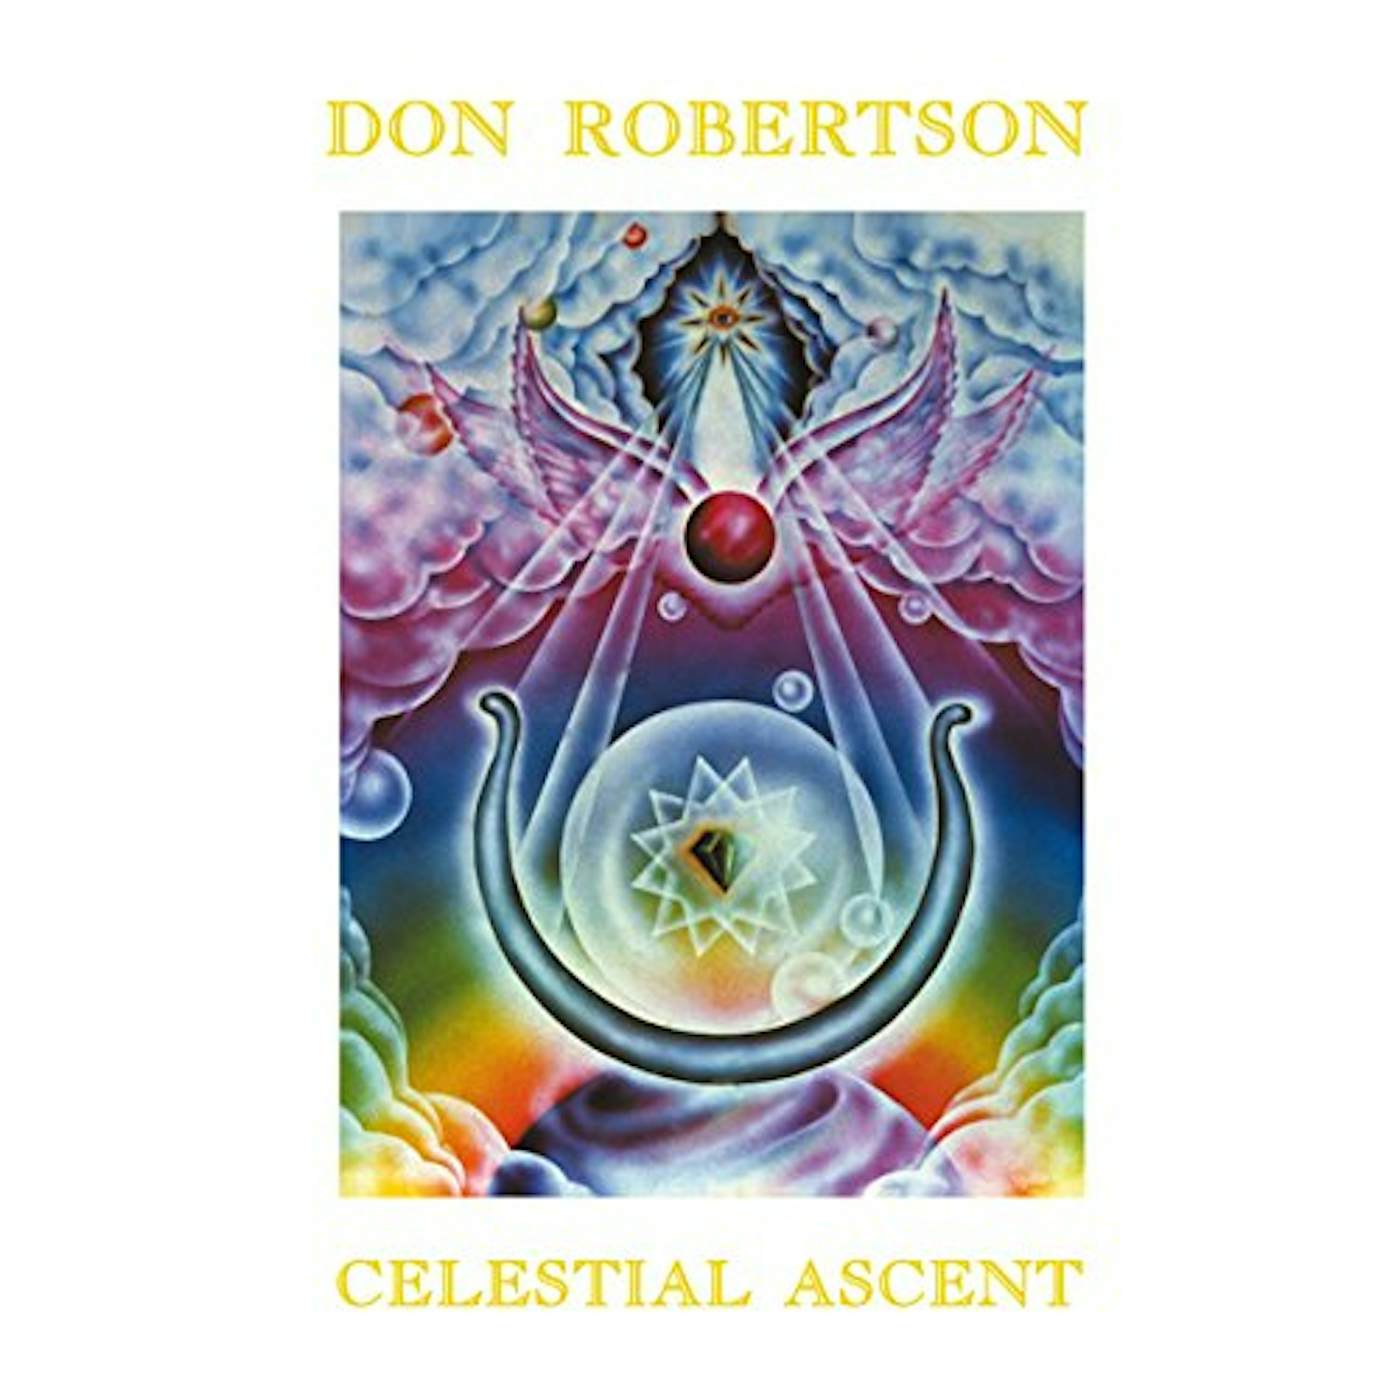 Don Robertson Celestial Ascent Vinyl Record